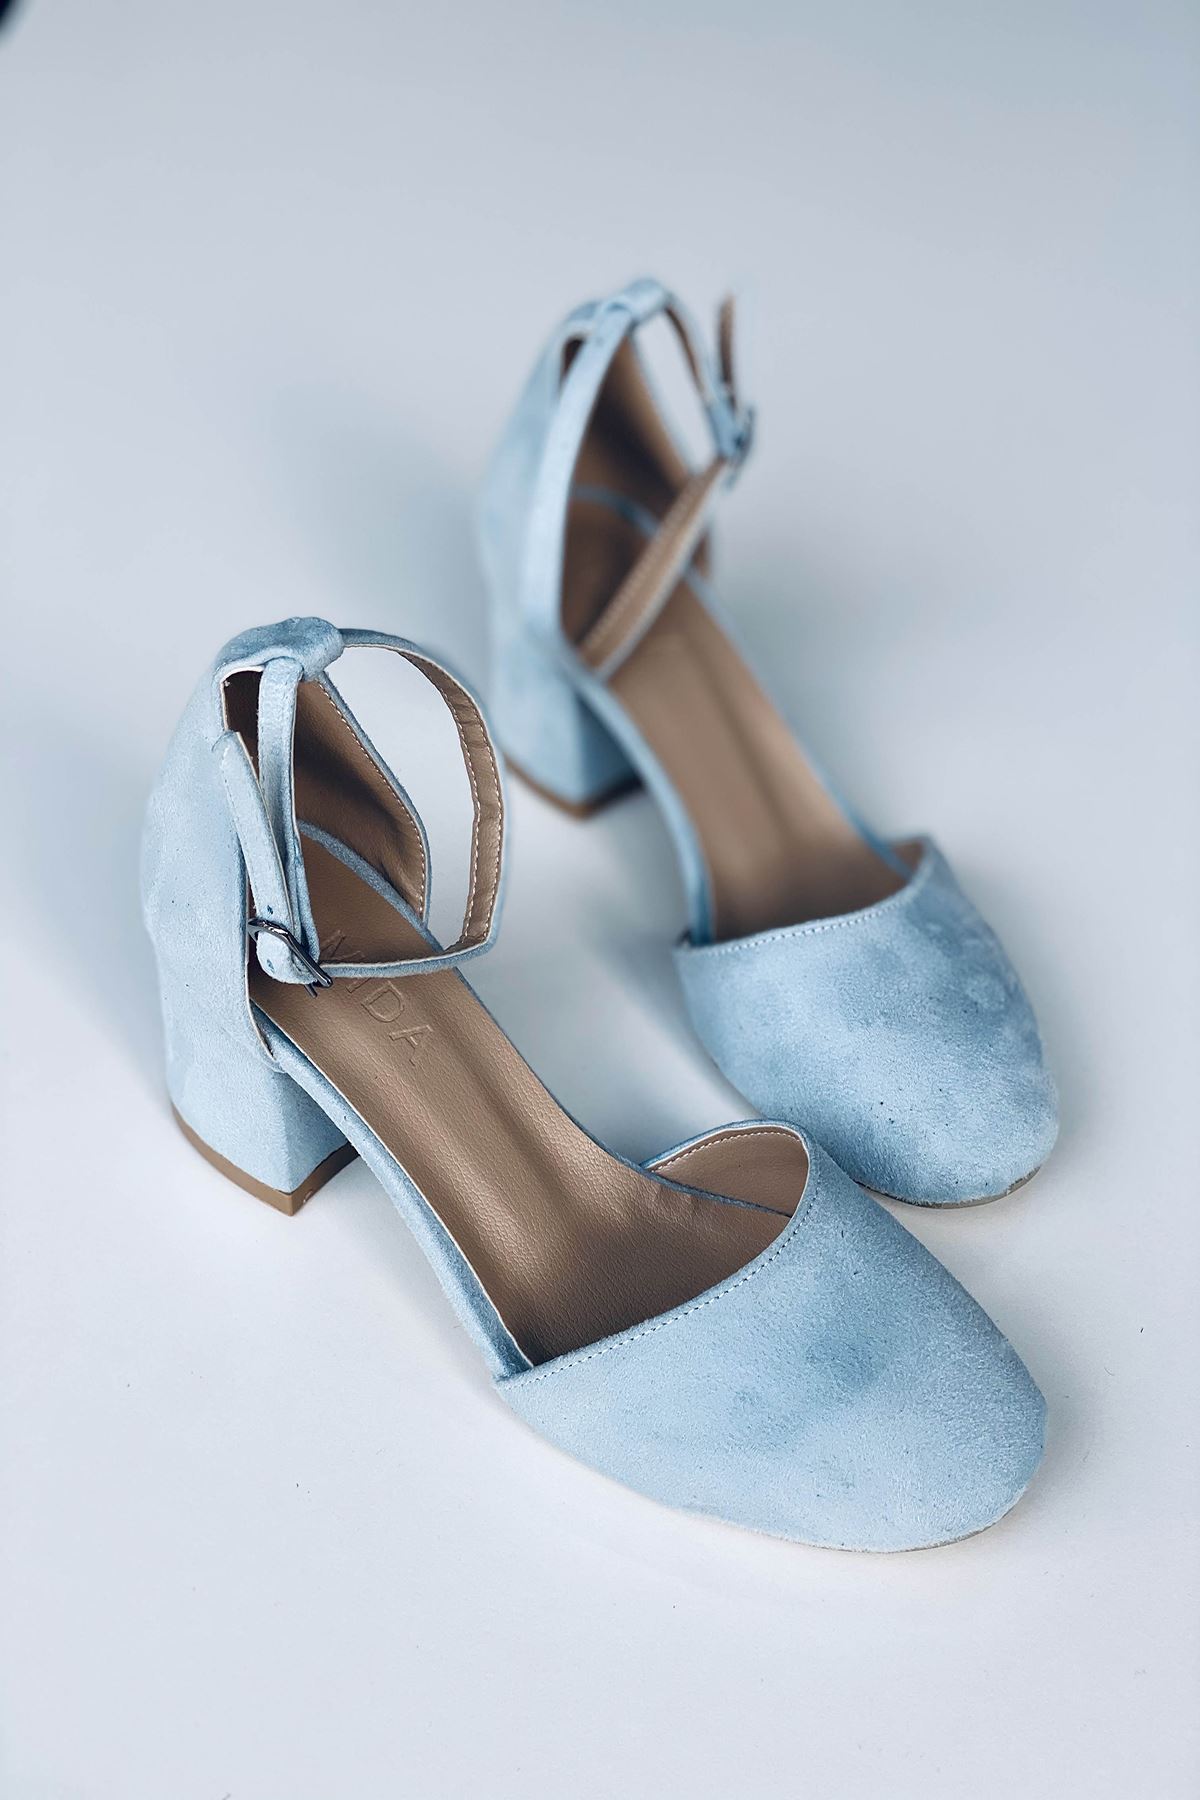 Mida Shoes Y202 Bebe Mavi Süet Topuklu Ayakkabı